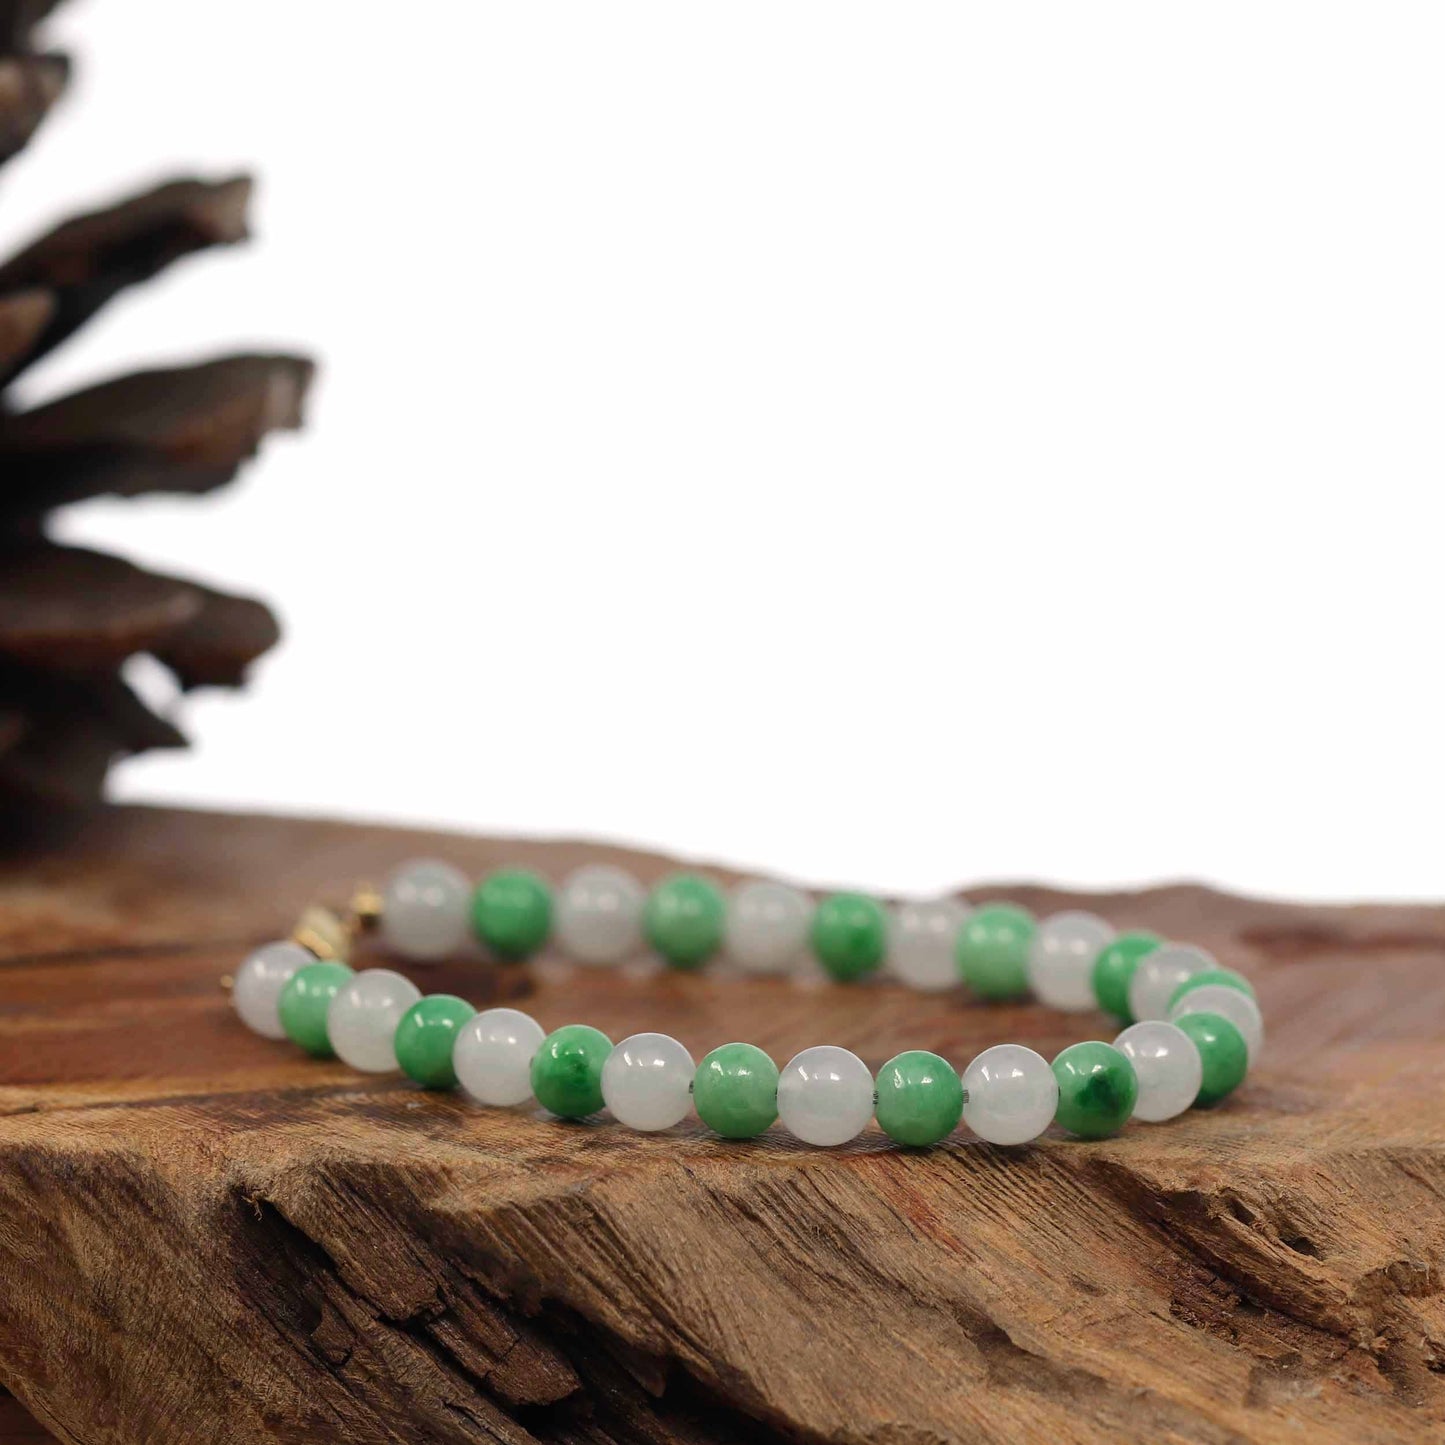 Green Jade 10 mm Round Bead Bracelet